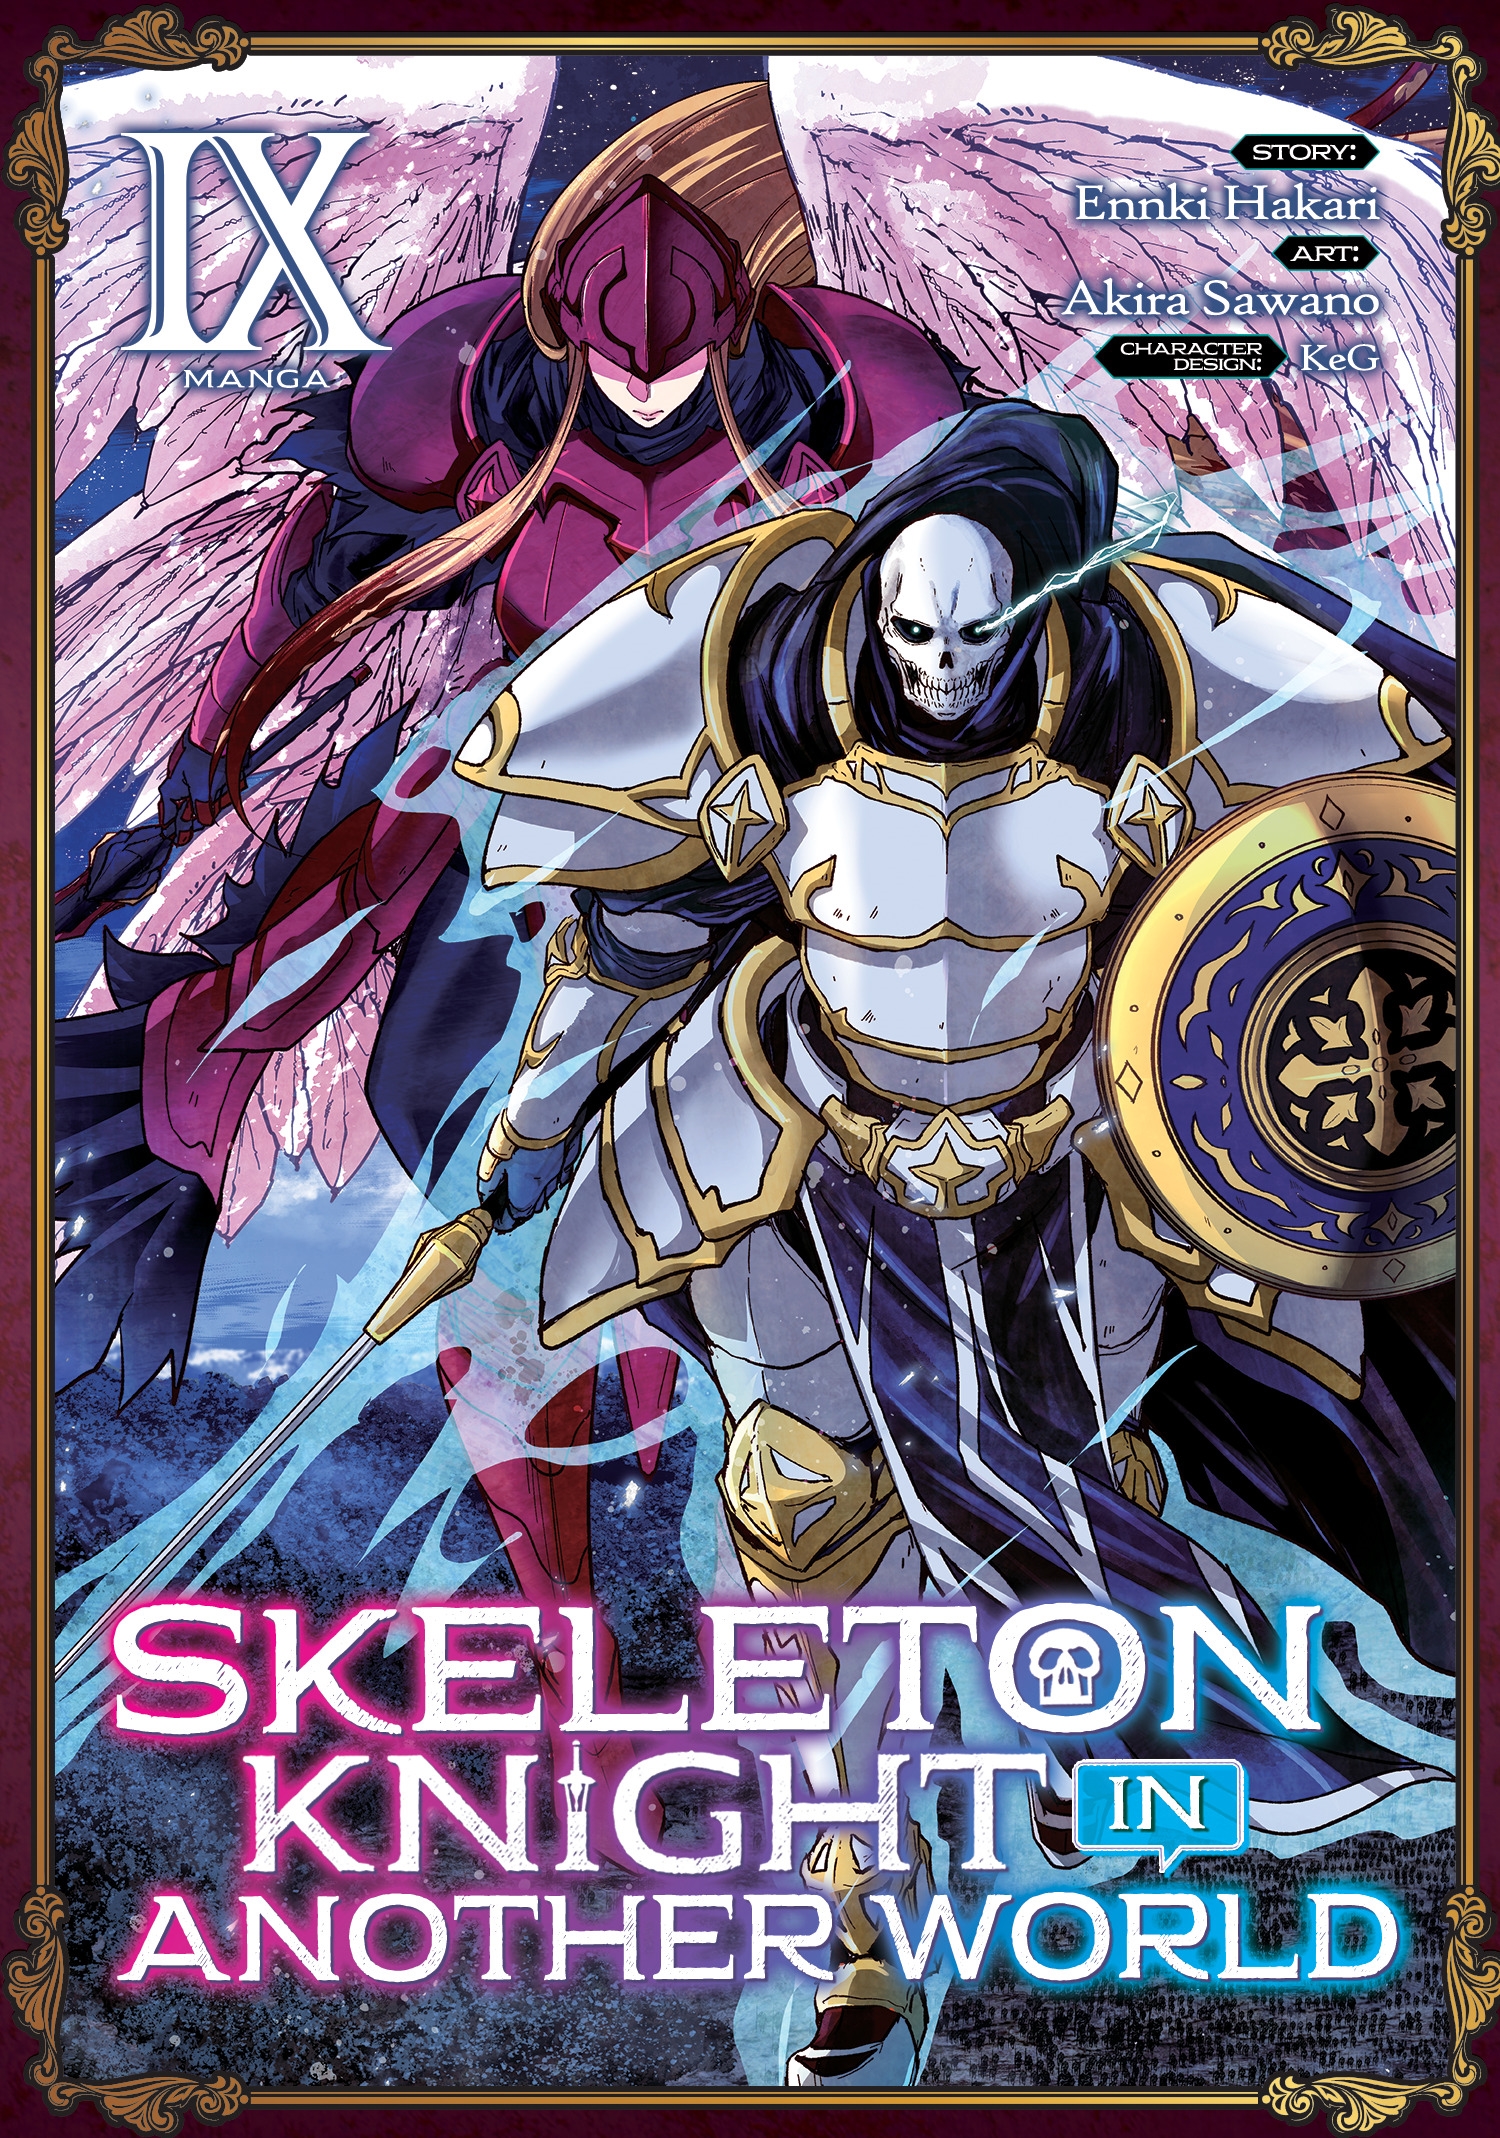 Skeleton Knight in Another World (Light Novel) Vol. 7